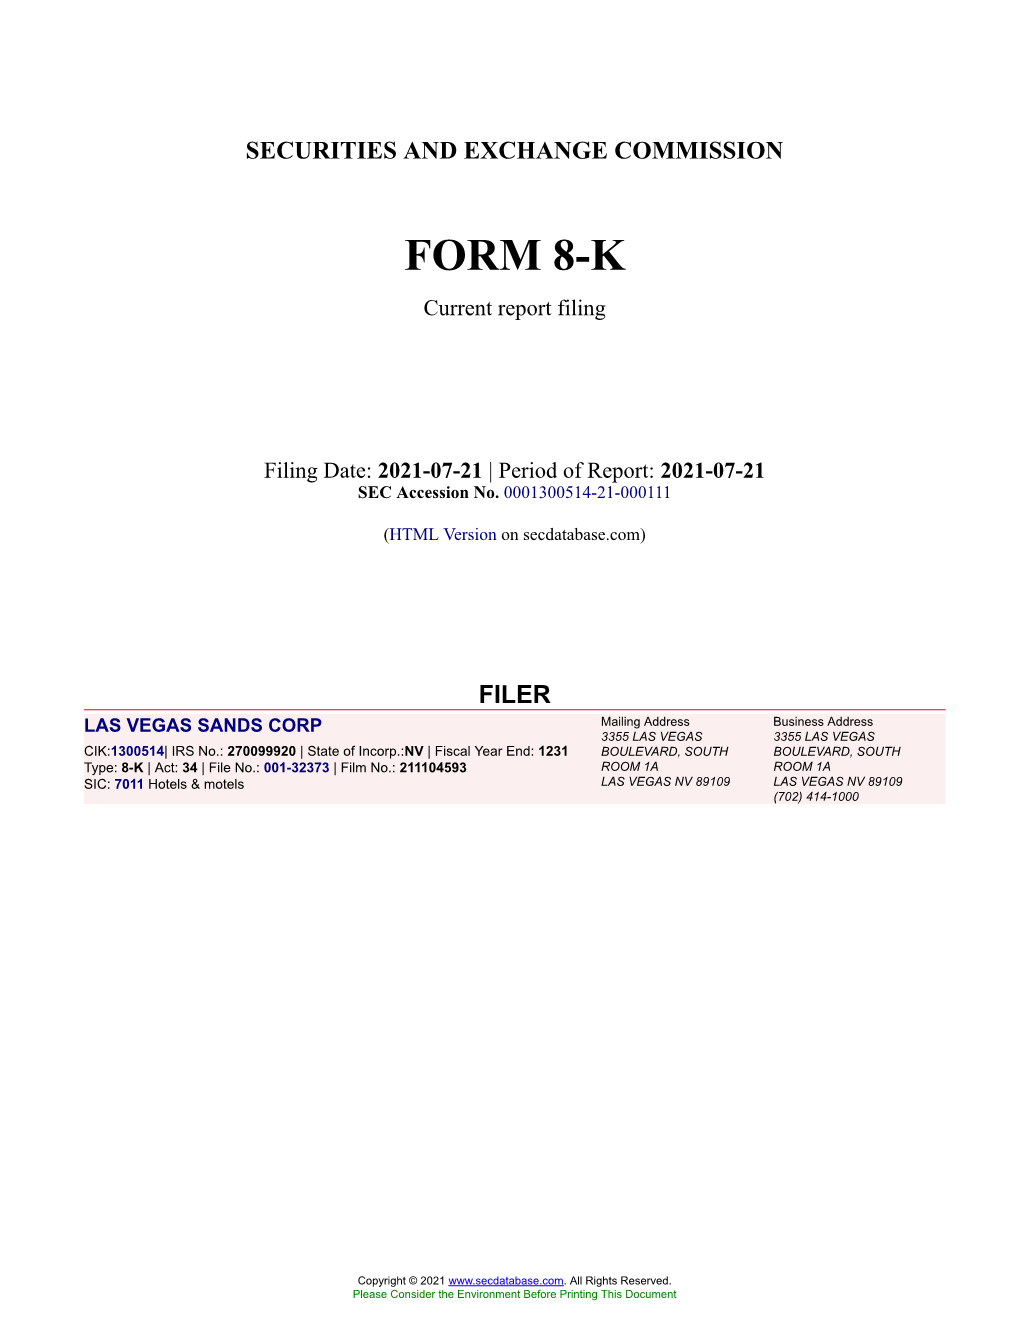 LAS VEGAS SANDS CORP Form 8-K Current Event Report Filed 2021-07-21